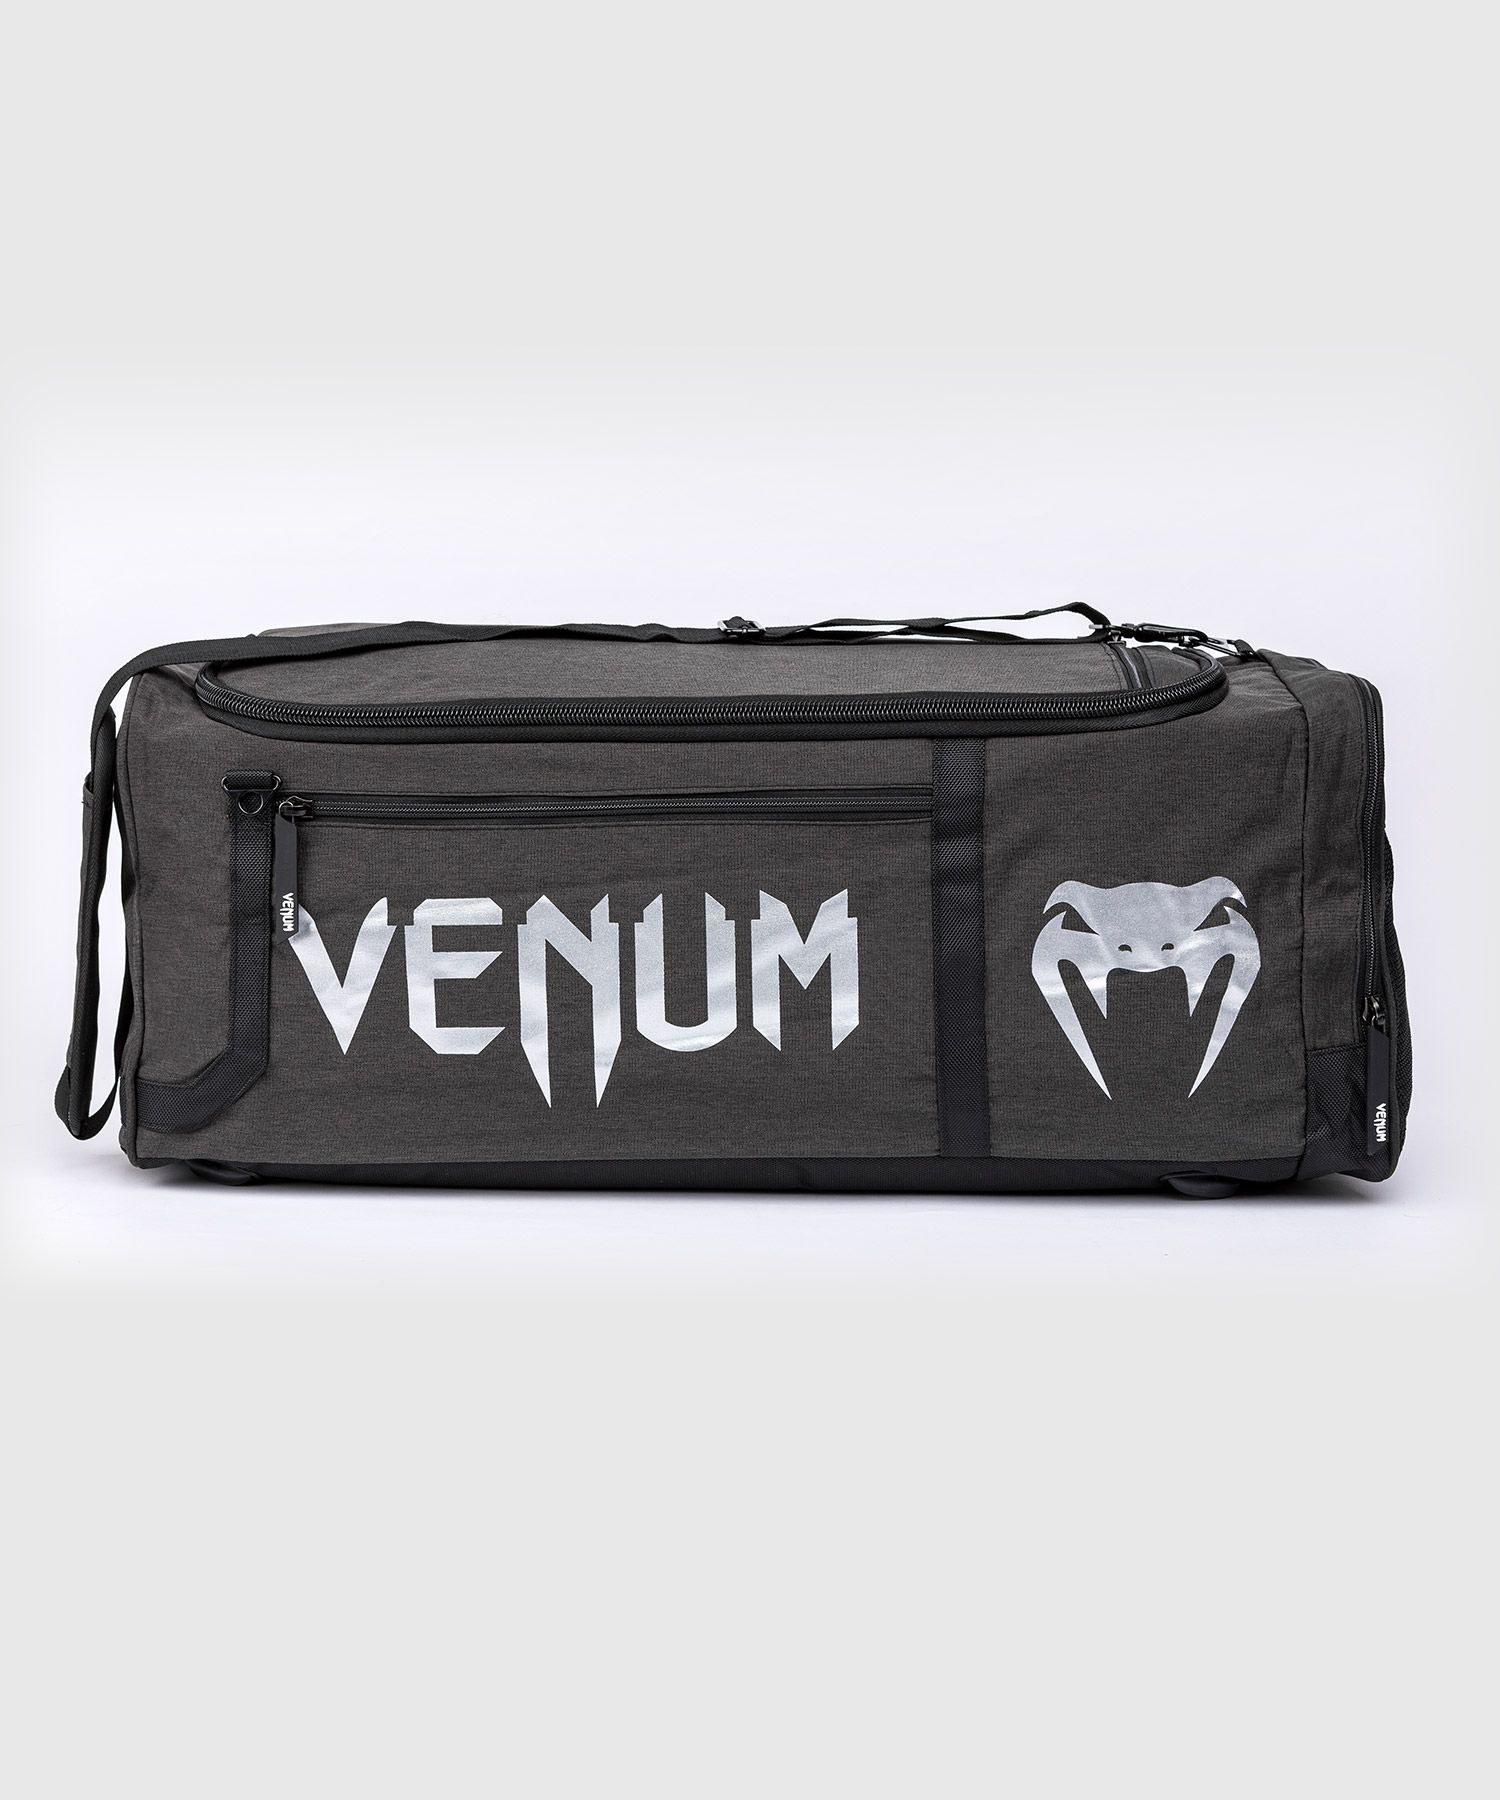 Venum Trainer Coach Backpack - Black/Silver